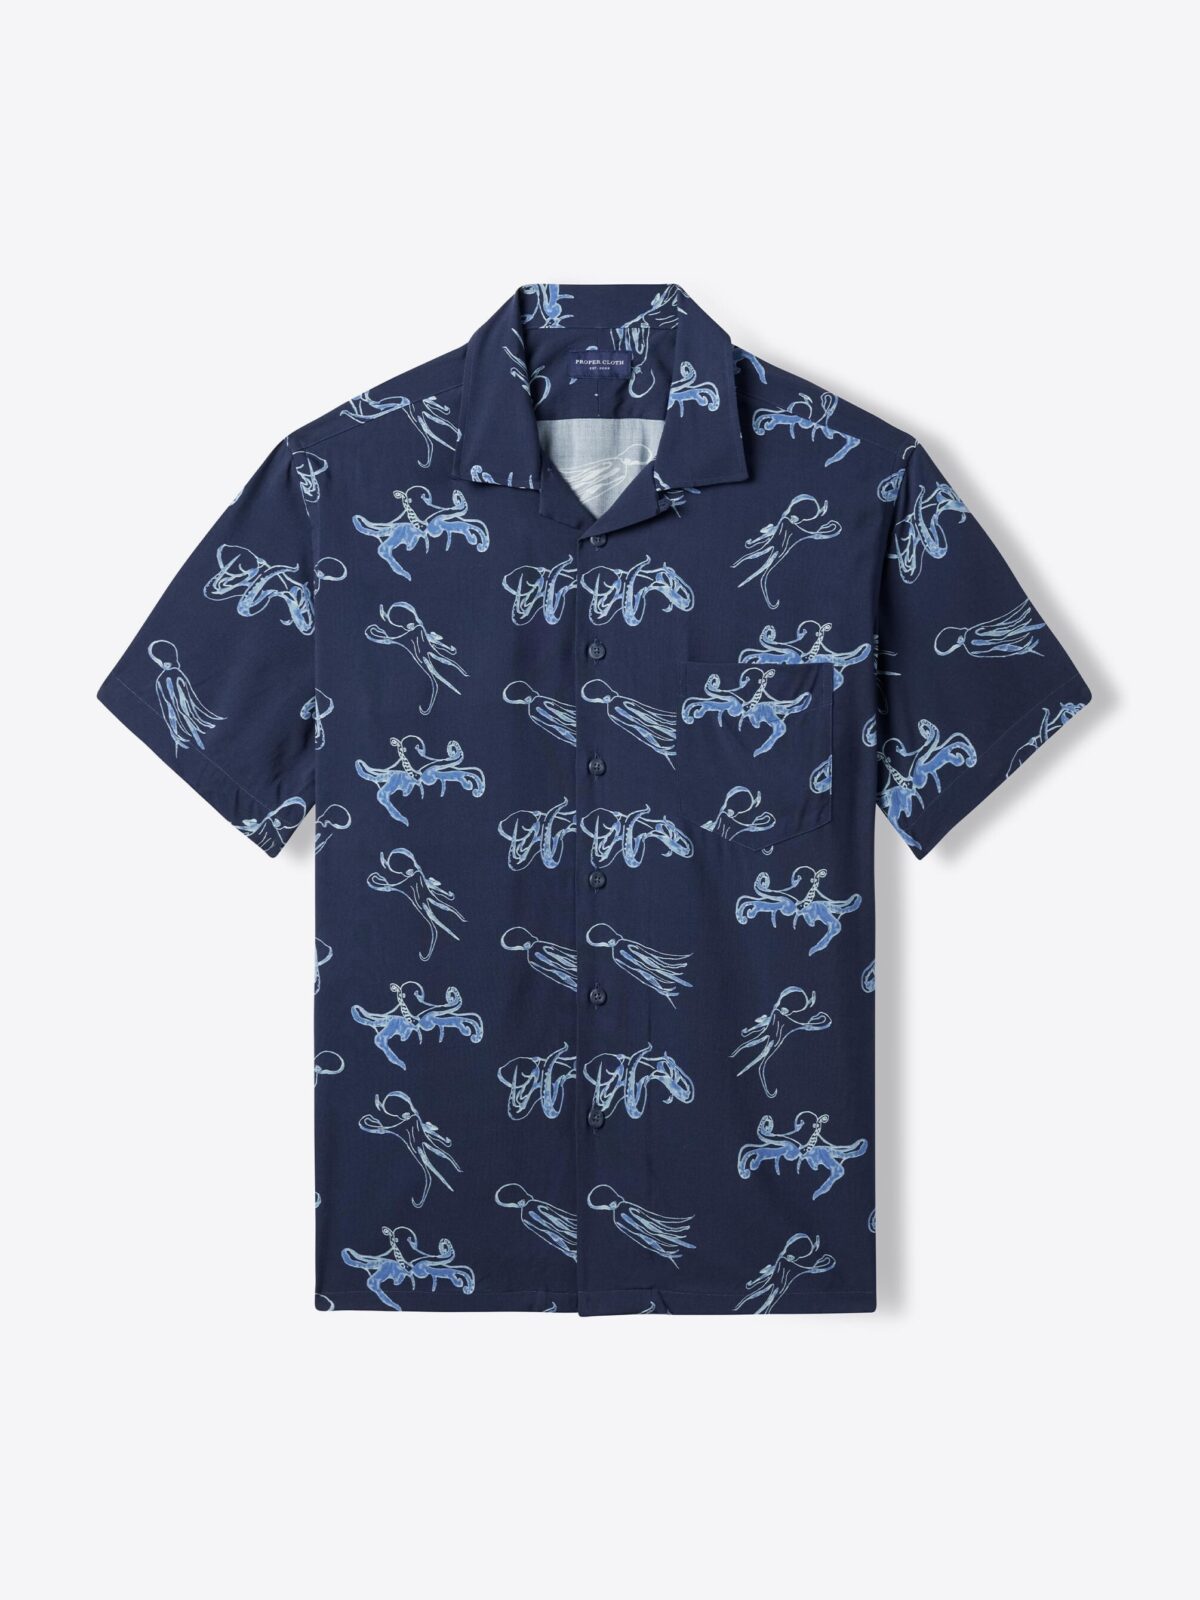 Japanese Sienna Rayon Blend Aloha Print Shirt by Proper Cloth